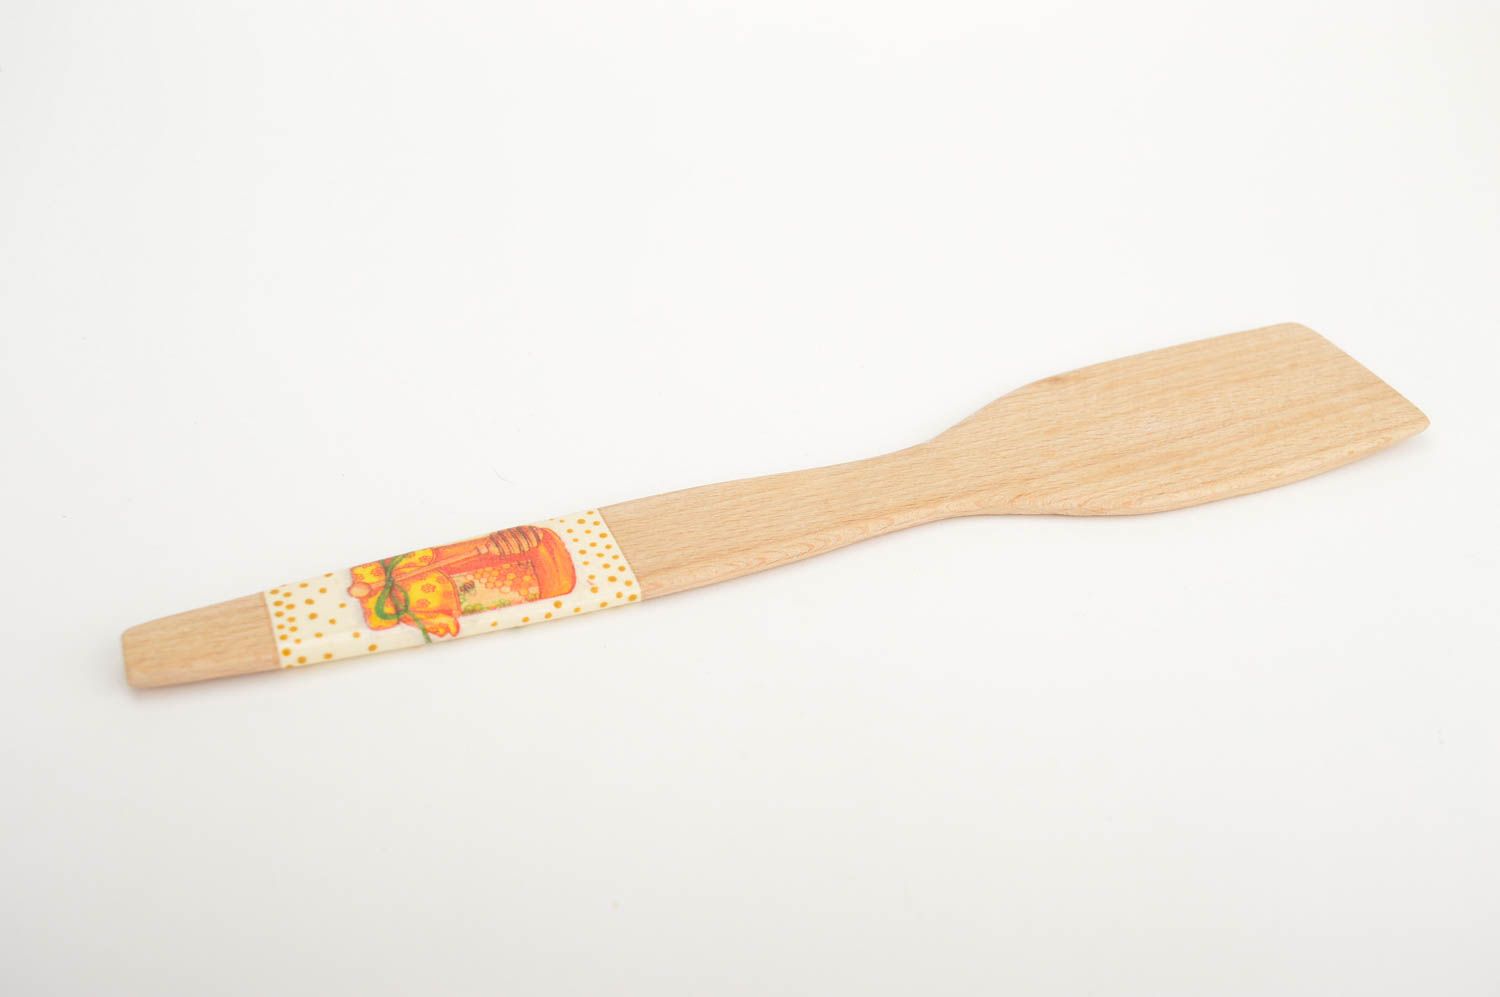 Unusual handmade wooden spatula decoupage ideas cooking tools wood craft photo 2